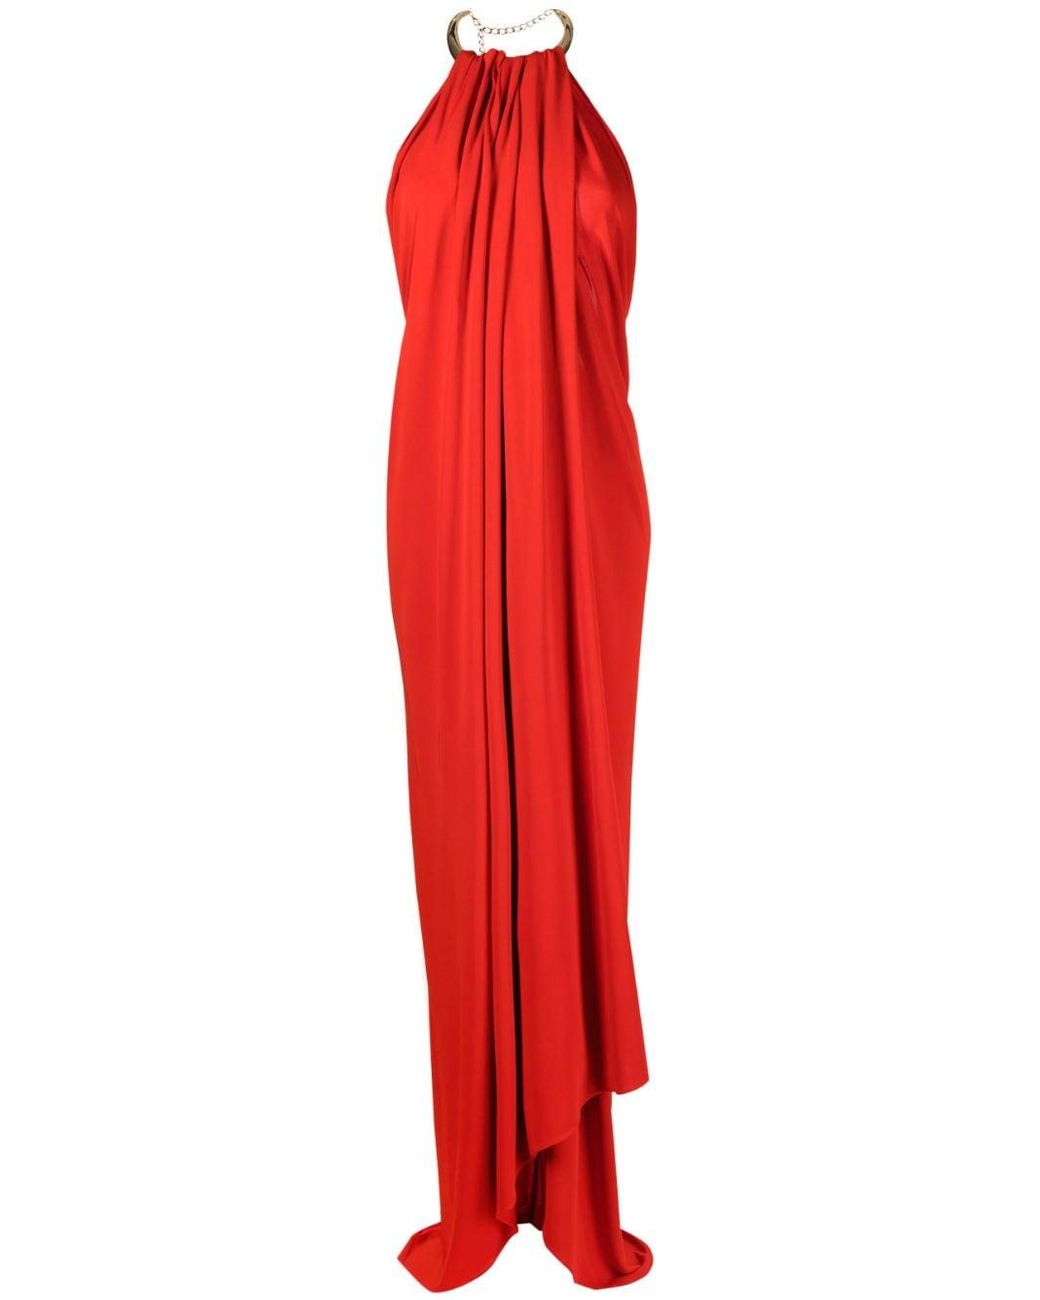 Michael Kors Halterneck Backless Dress in Red | Lyst